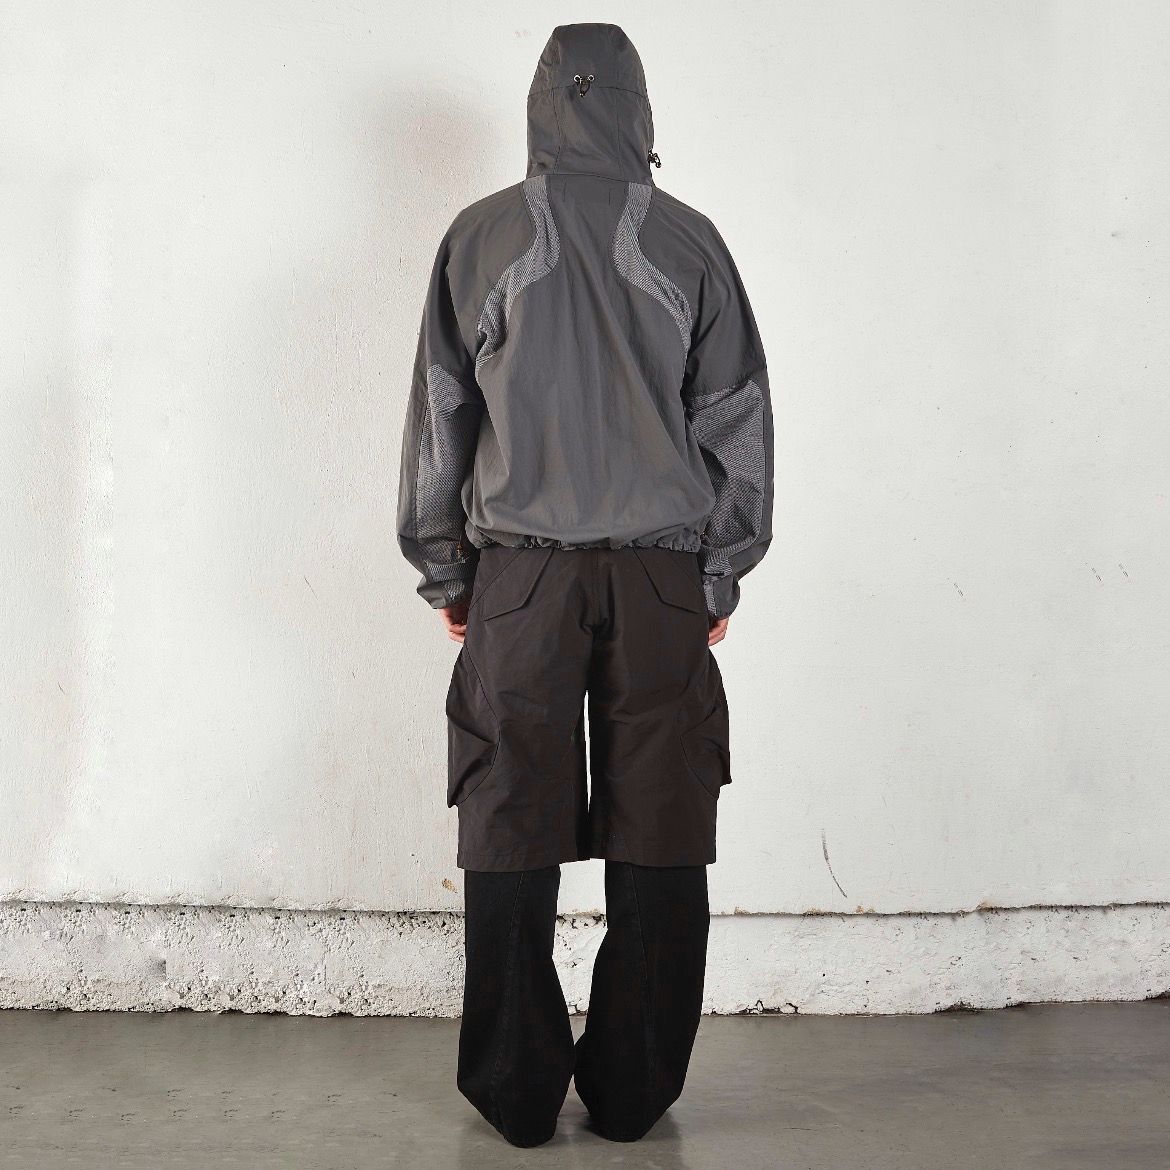 NVRFRGT - 【残りわずか】Paneled Hooded Jacket | ACRMTSM ONLINE STORE